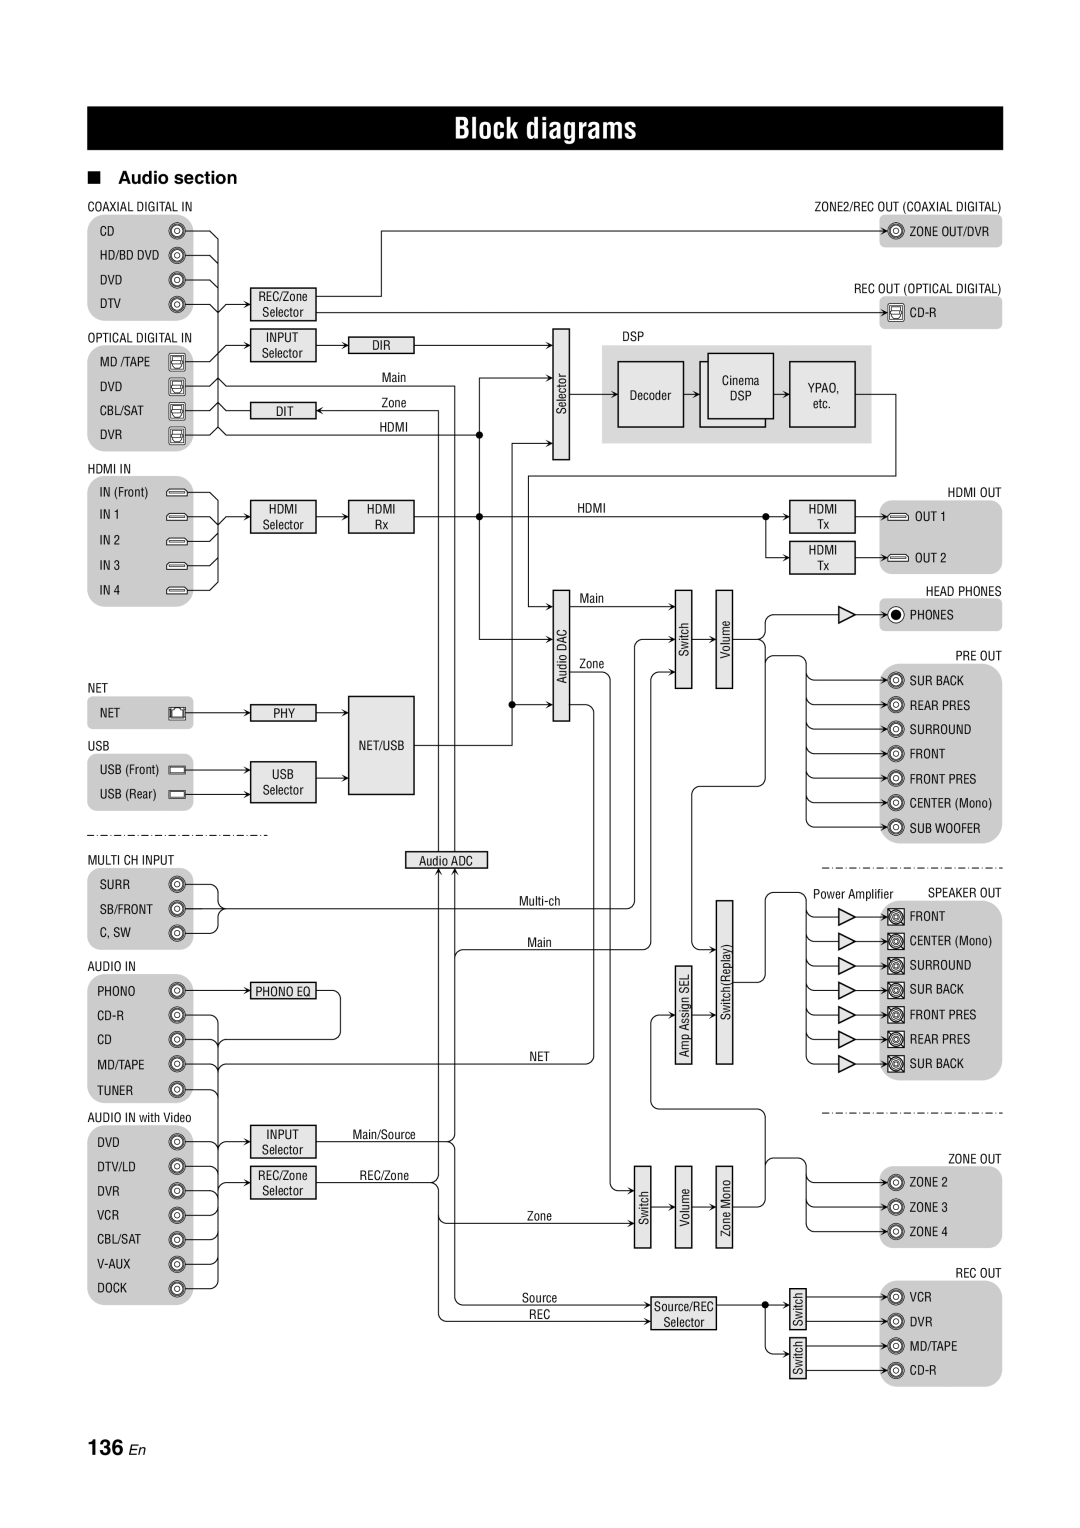 Yamaha DSP-Z11 owner manual Block diagrams, 136 En, Audio section 